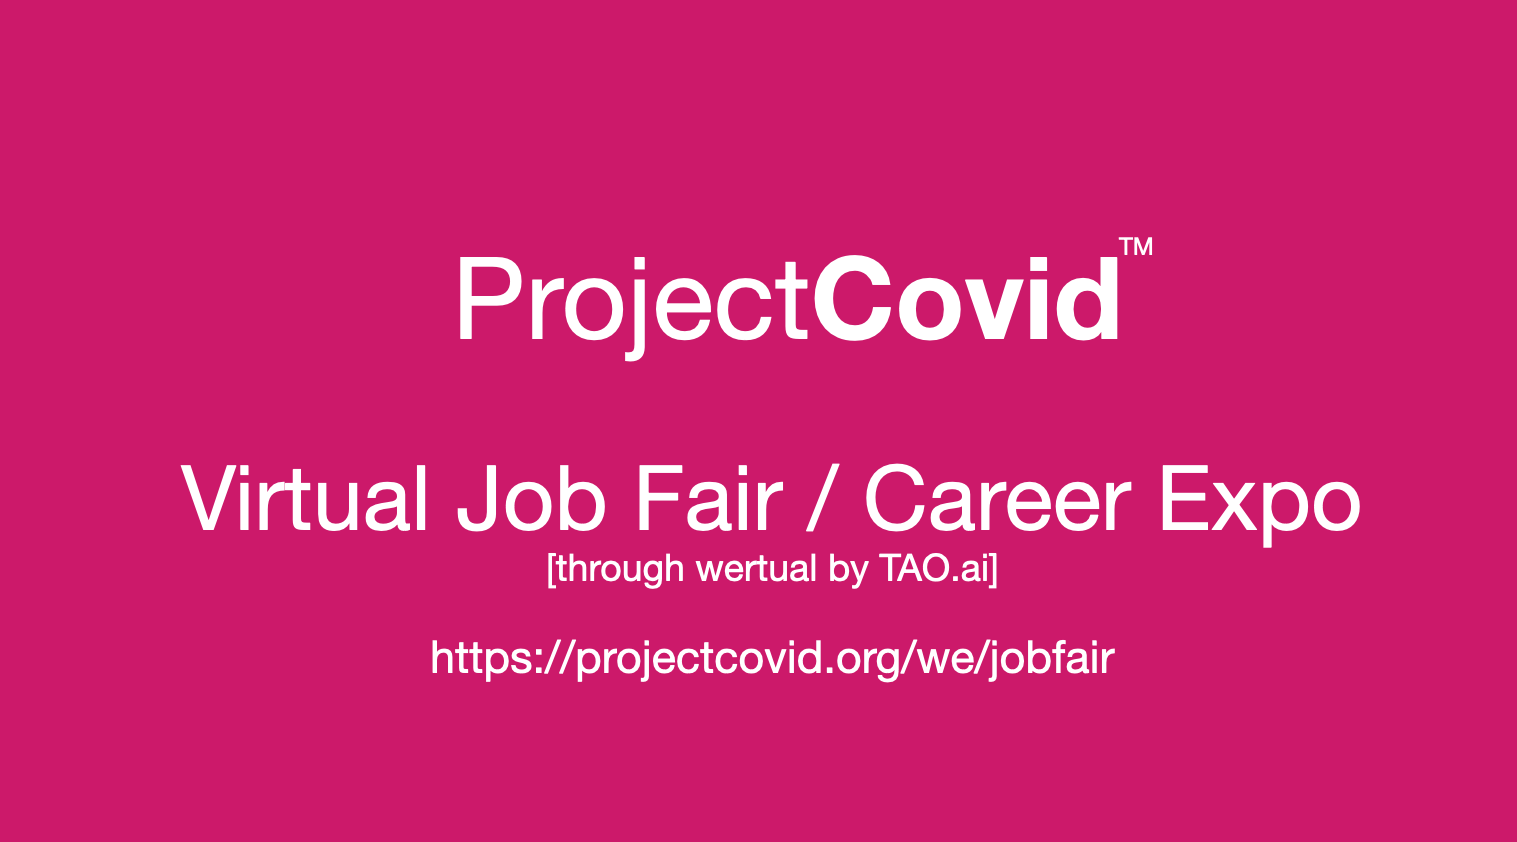 #ProjectCovid Virtual Job Fair / Career Expo Event #Detroit